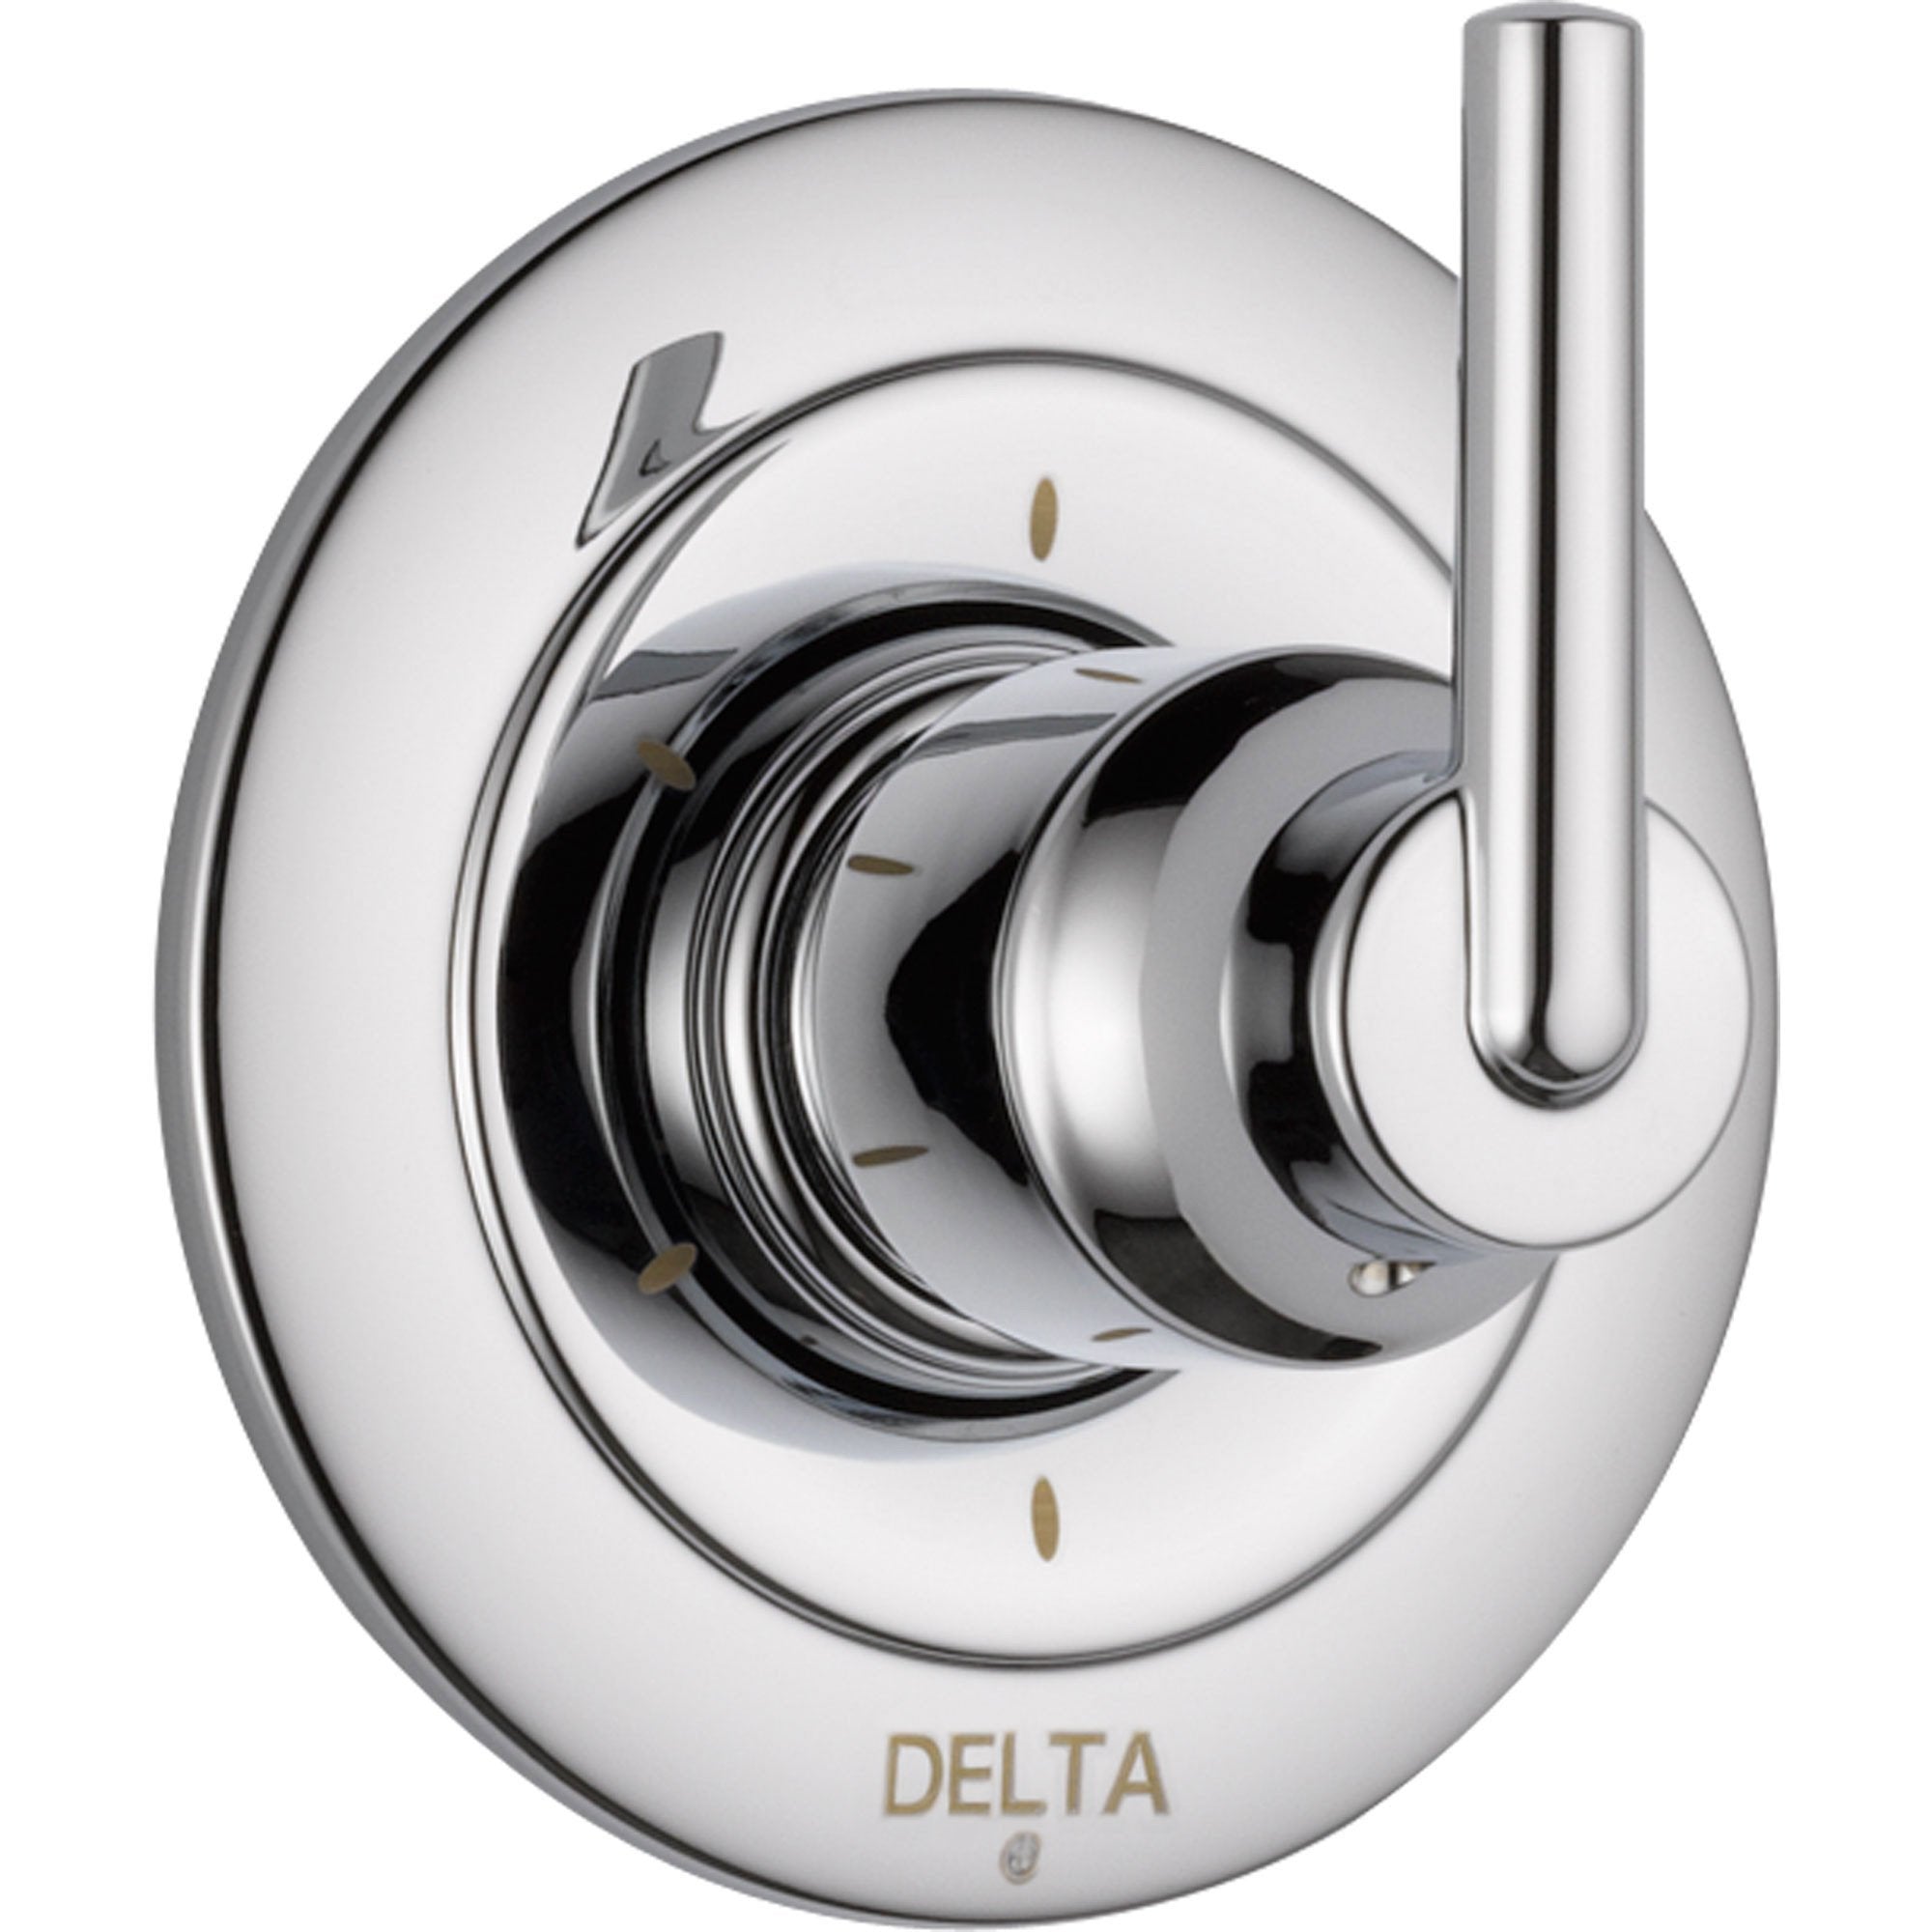 Delta Trinsic 6-Setting Chrome Single Handle Shower Diverter Trim Kit 590192